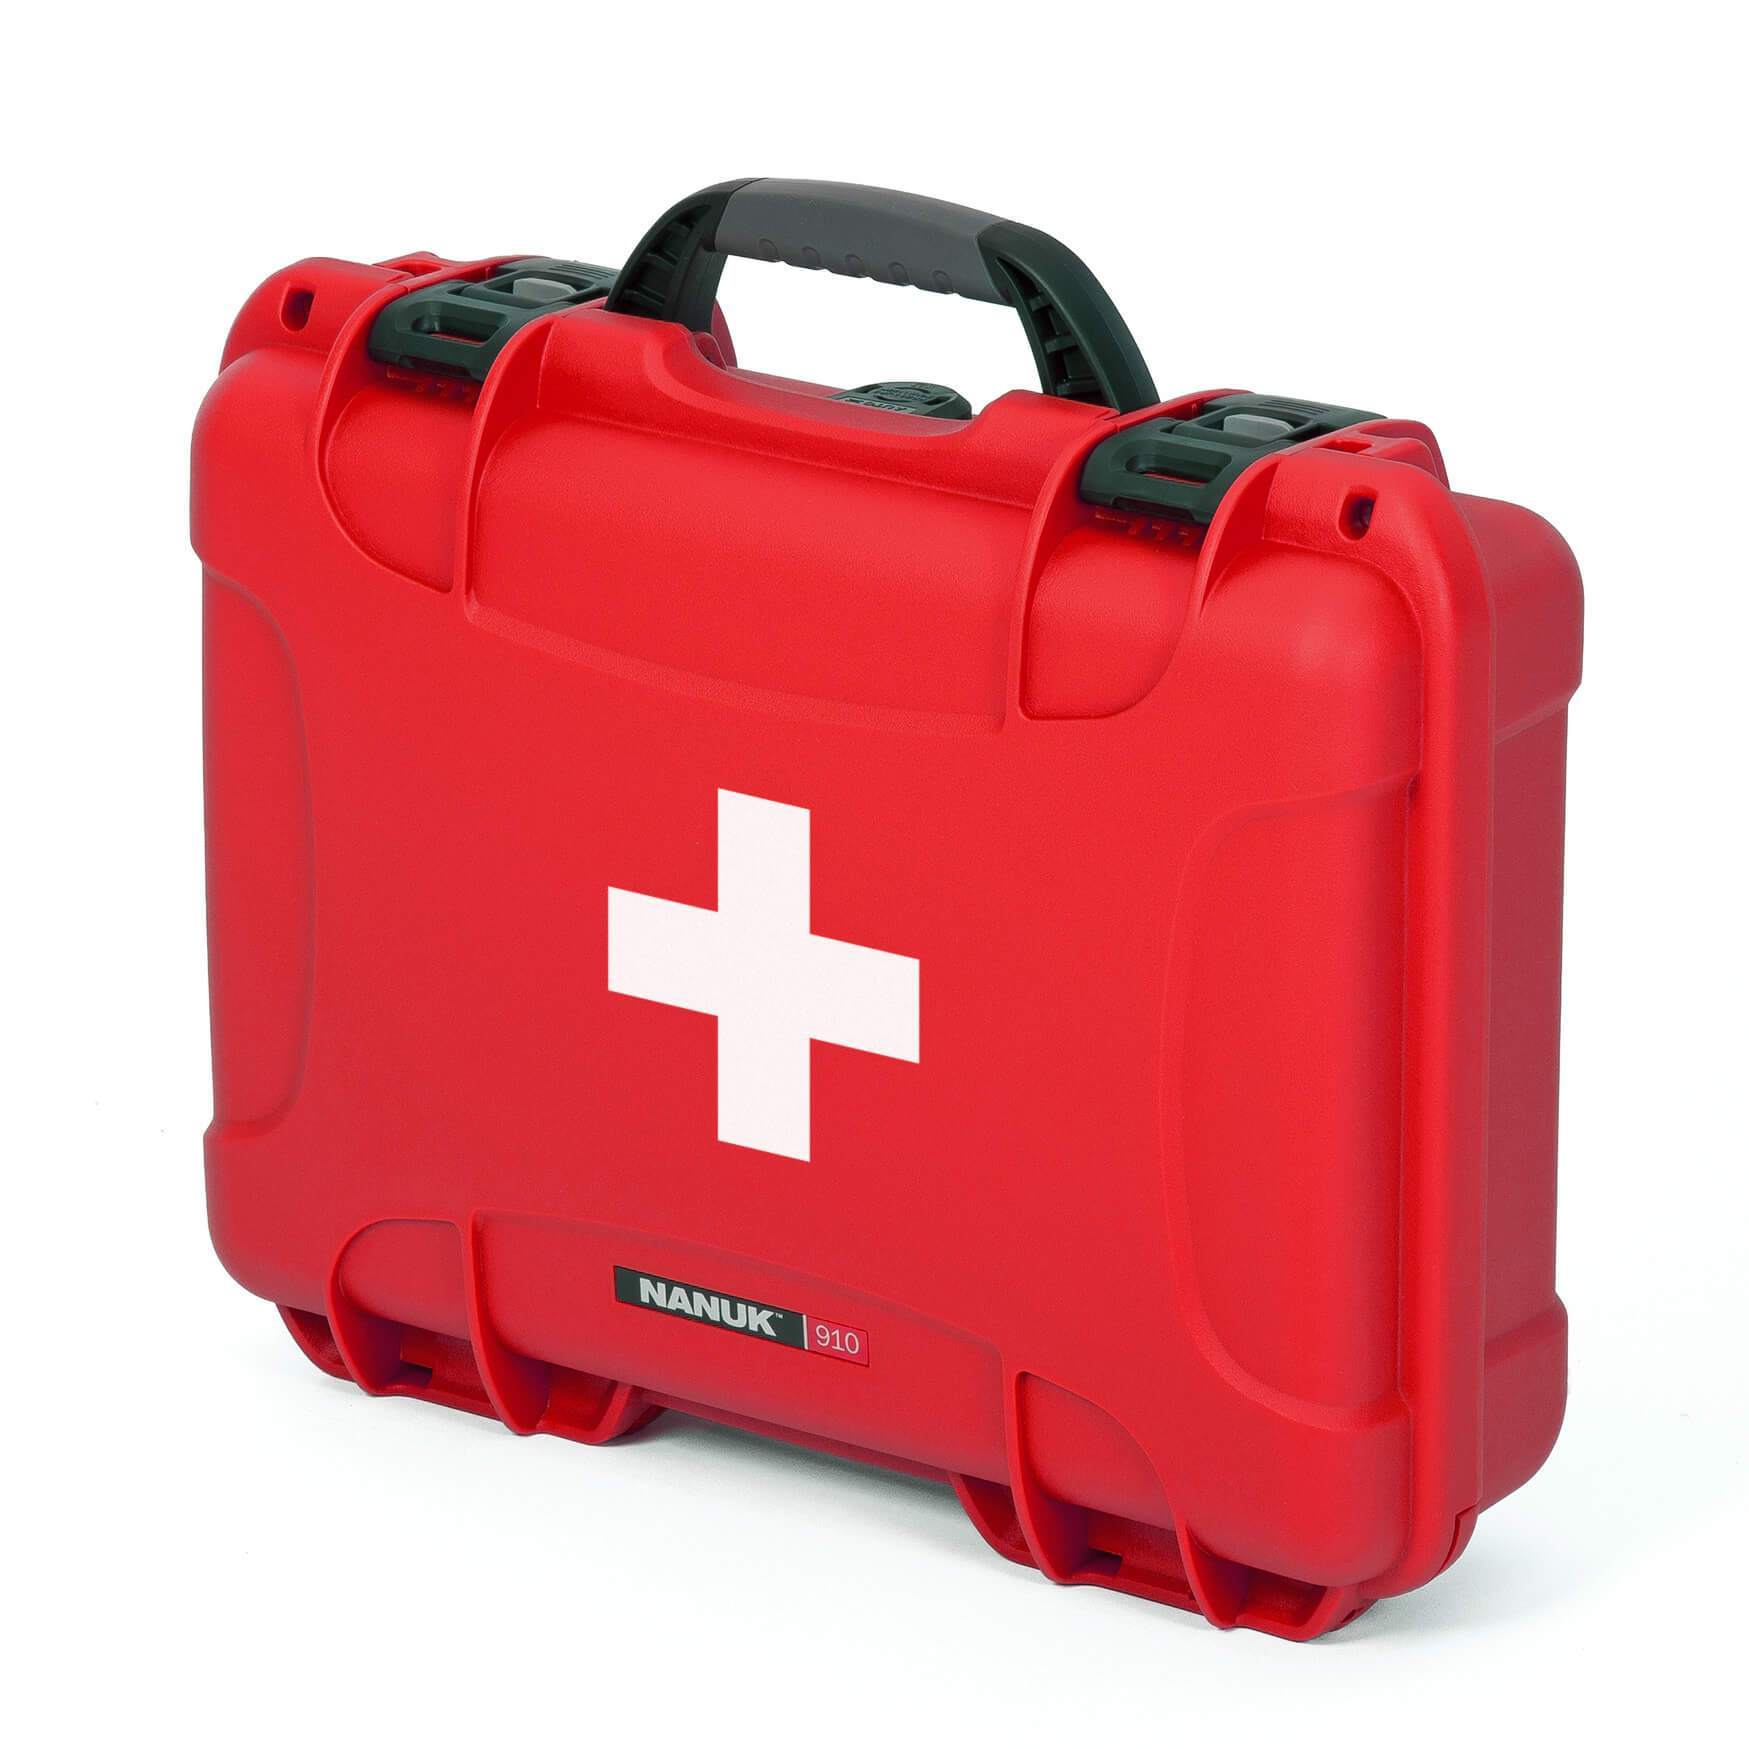 NANUK 910 First Aid case-Outdoor Case-Red-NANUK